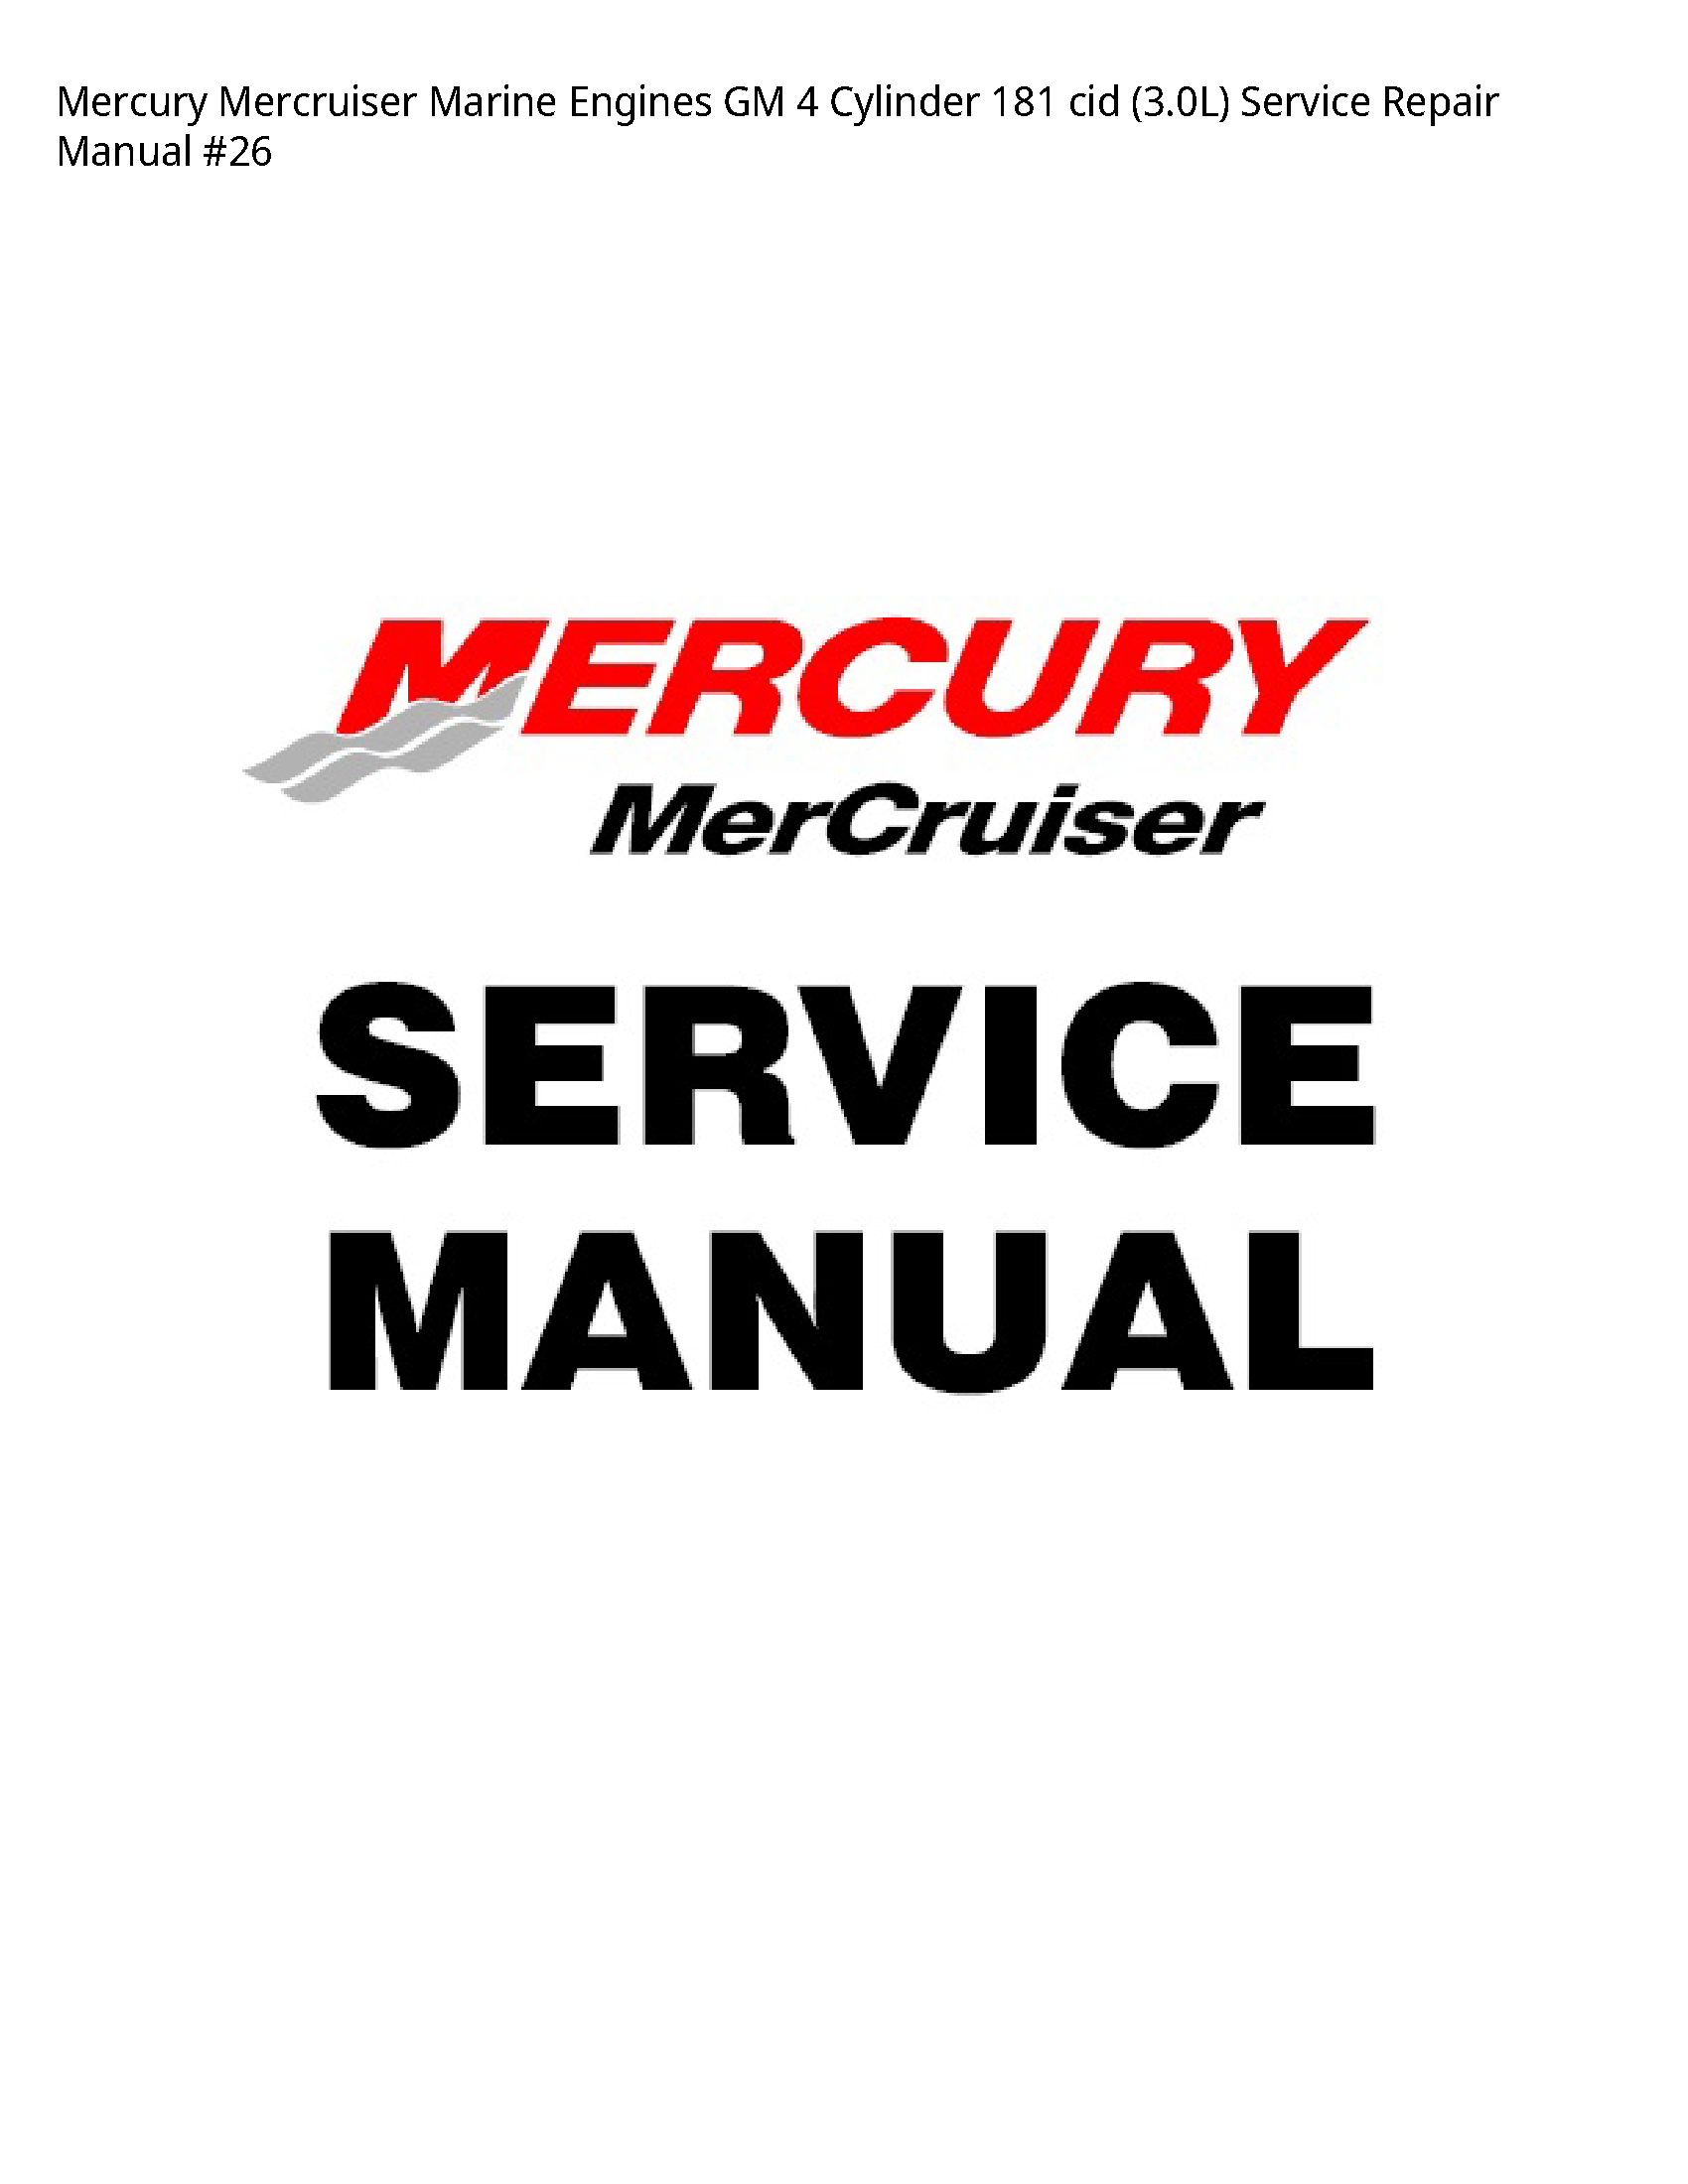 Mercury 4 Mercruiser Marine Engines GM Cylinder cid manual